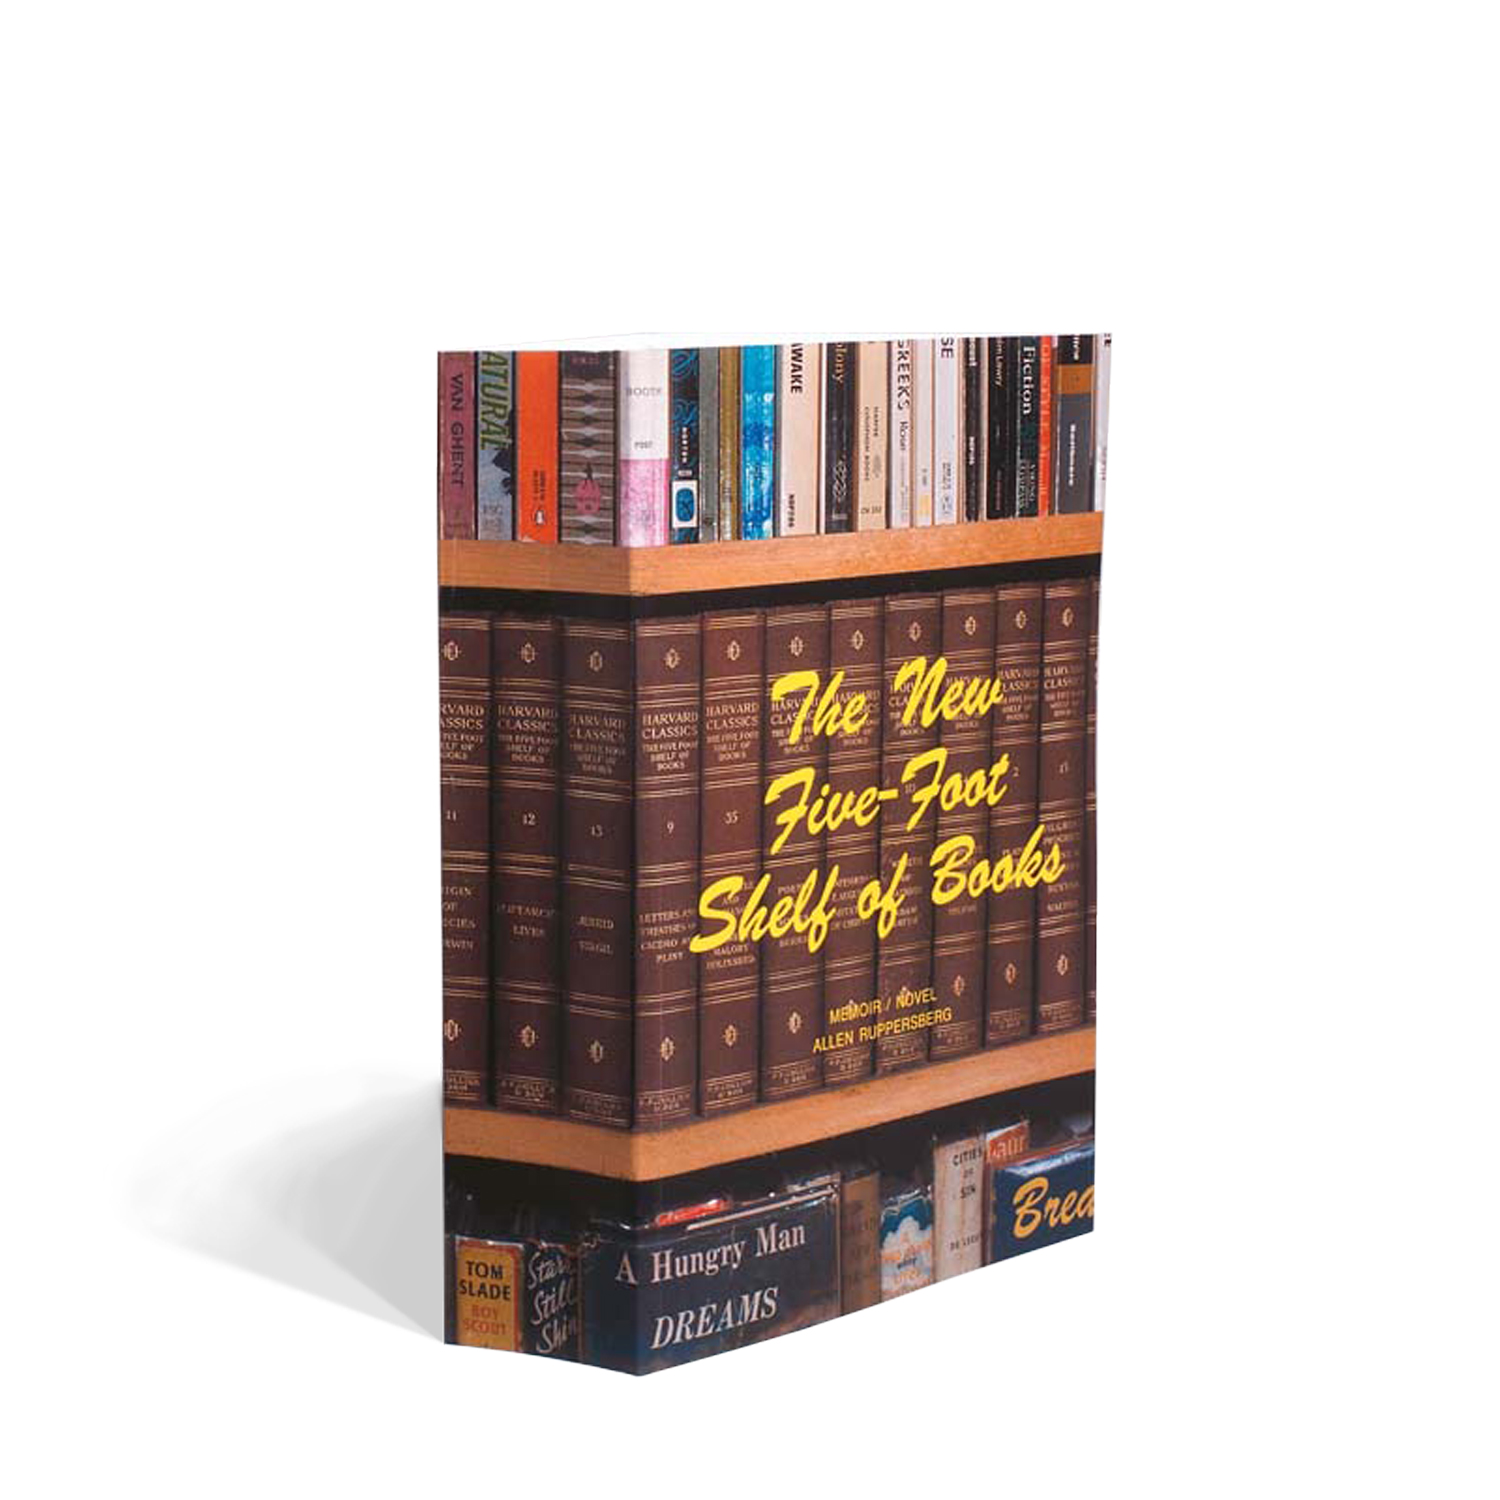 Allen Ruppersberg - The New Five Foot Shelf of Books, 2003